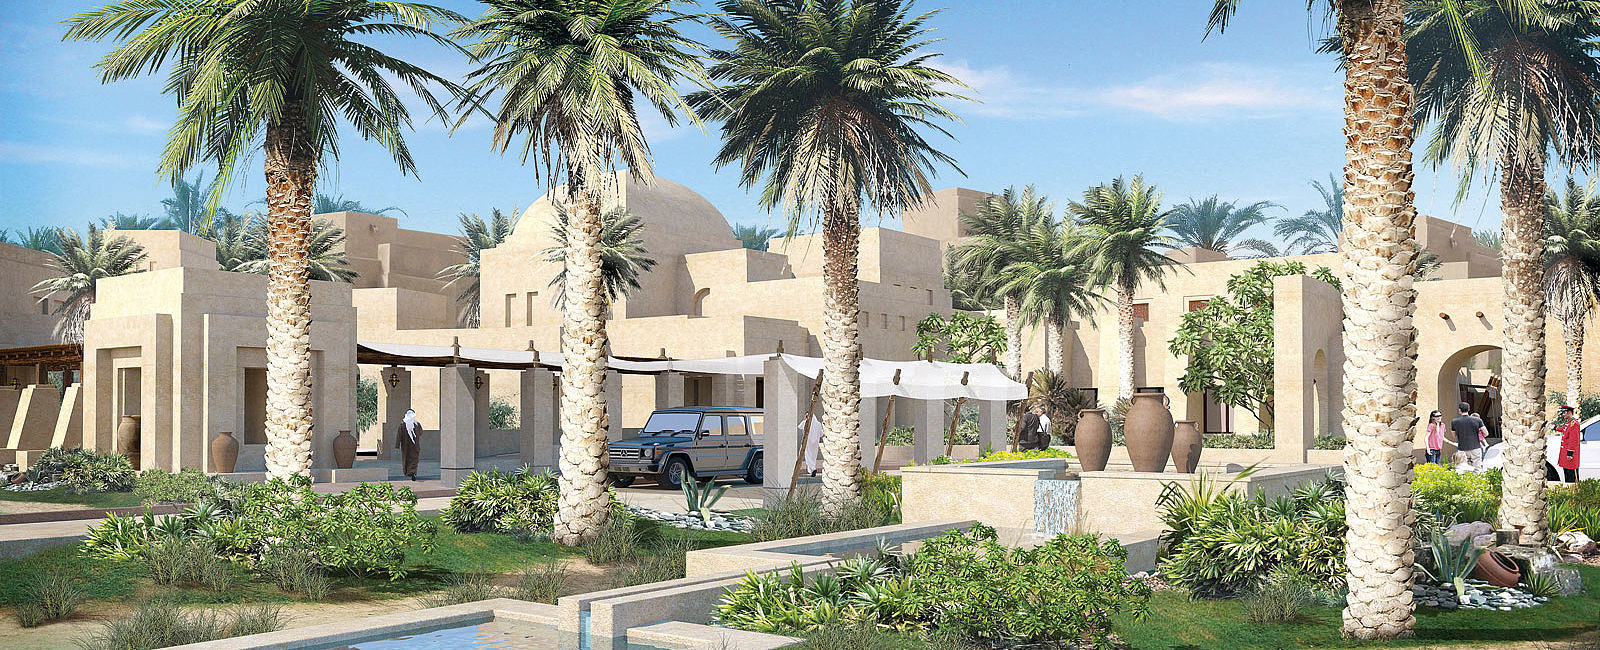 VERY SPECIAL HOTEL
 Jumeirah Al Wathba Desert Resort & Jumeirah Saadiyat Island, Abu Dhabi 
 Zwei neue Top-Adressen in Abu Dhabi 